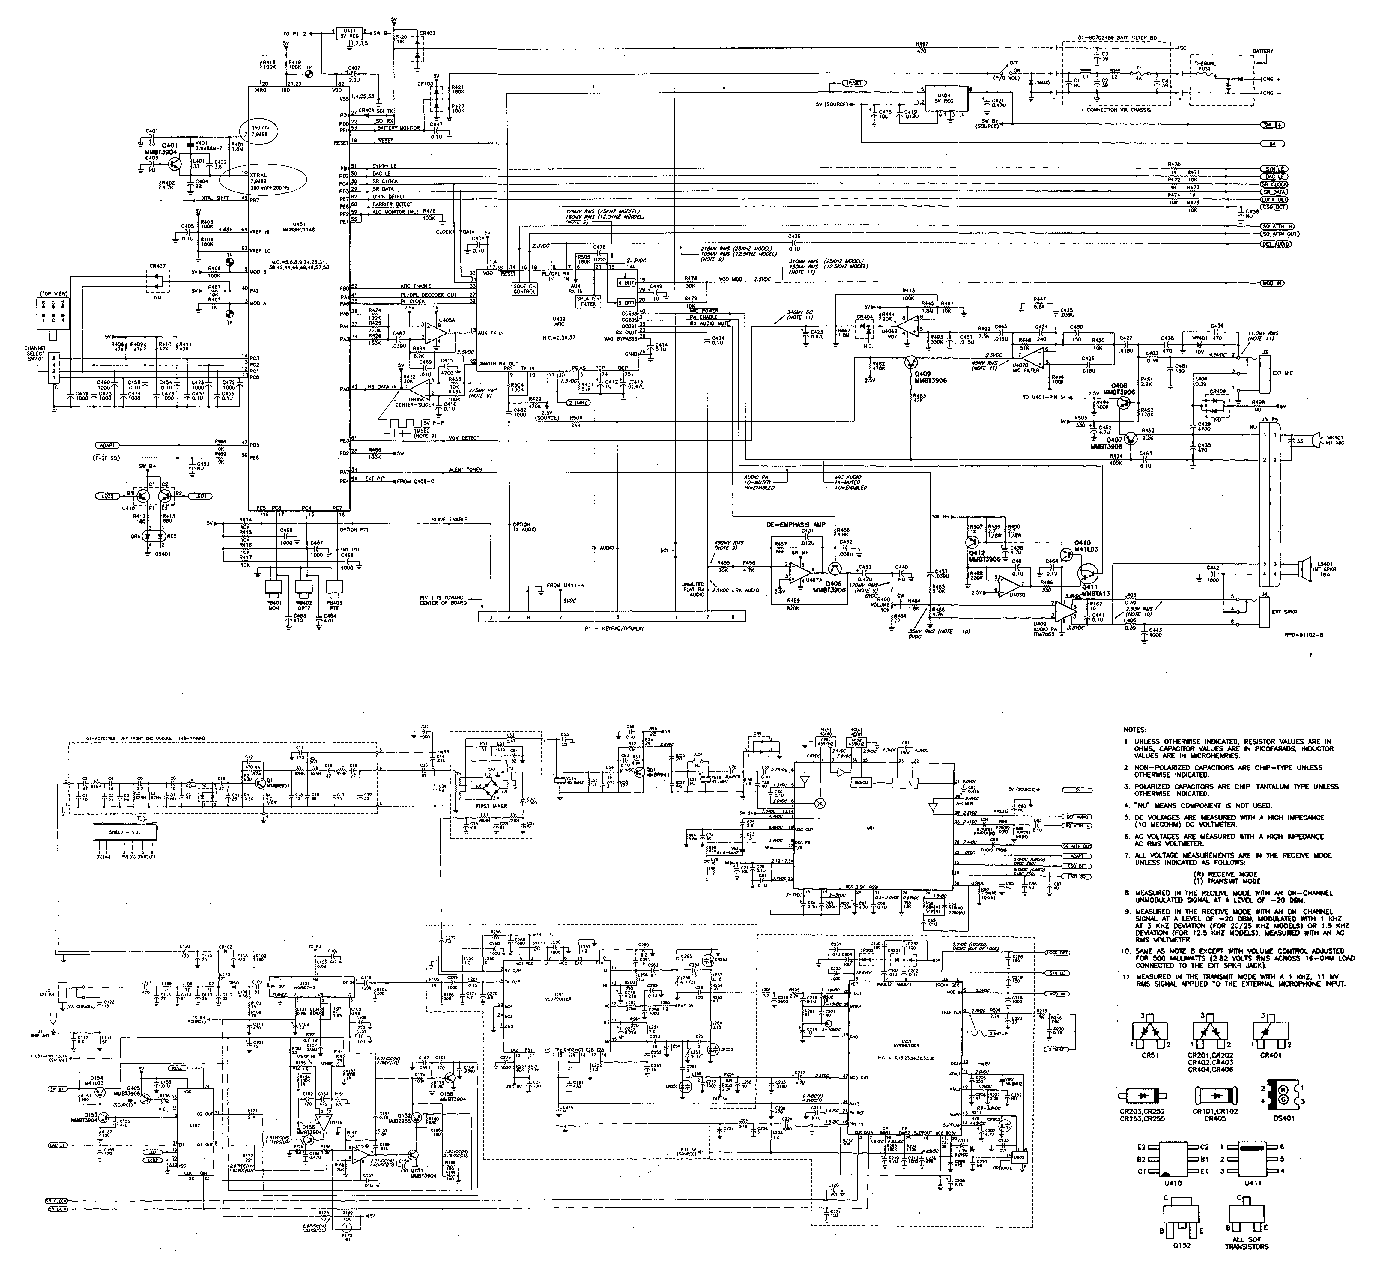 [DIAGRAM] Motorola Gm300 Circuit Diagram - MYDIAGRAM.ONLINE